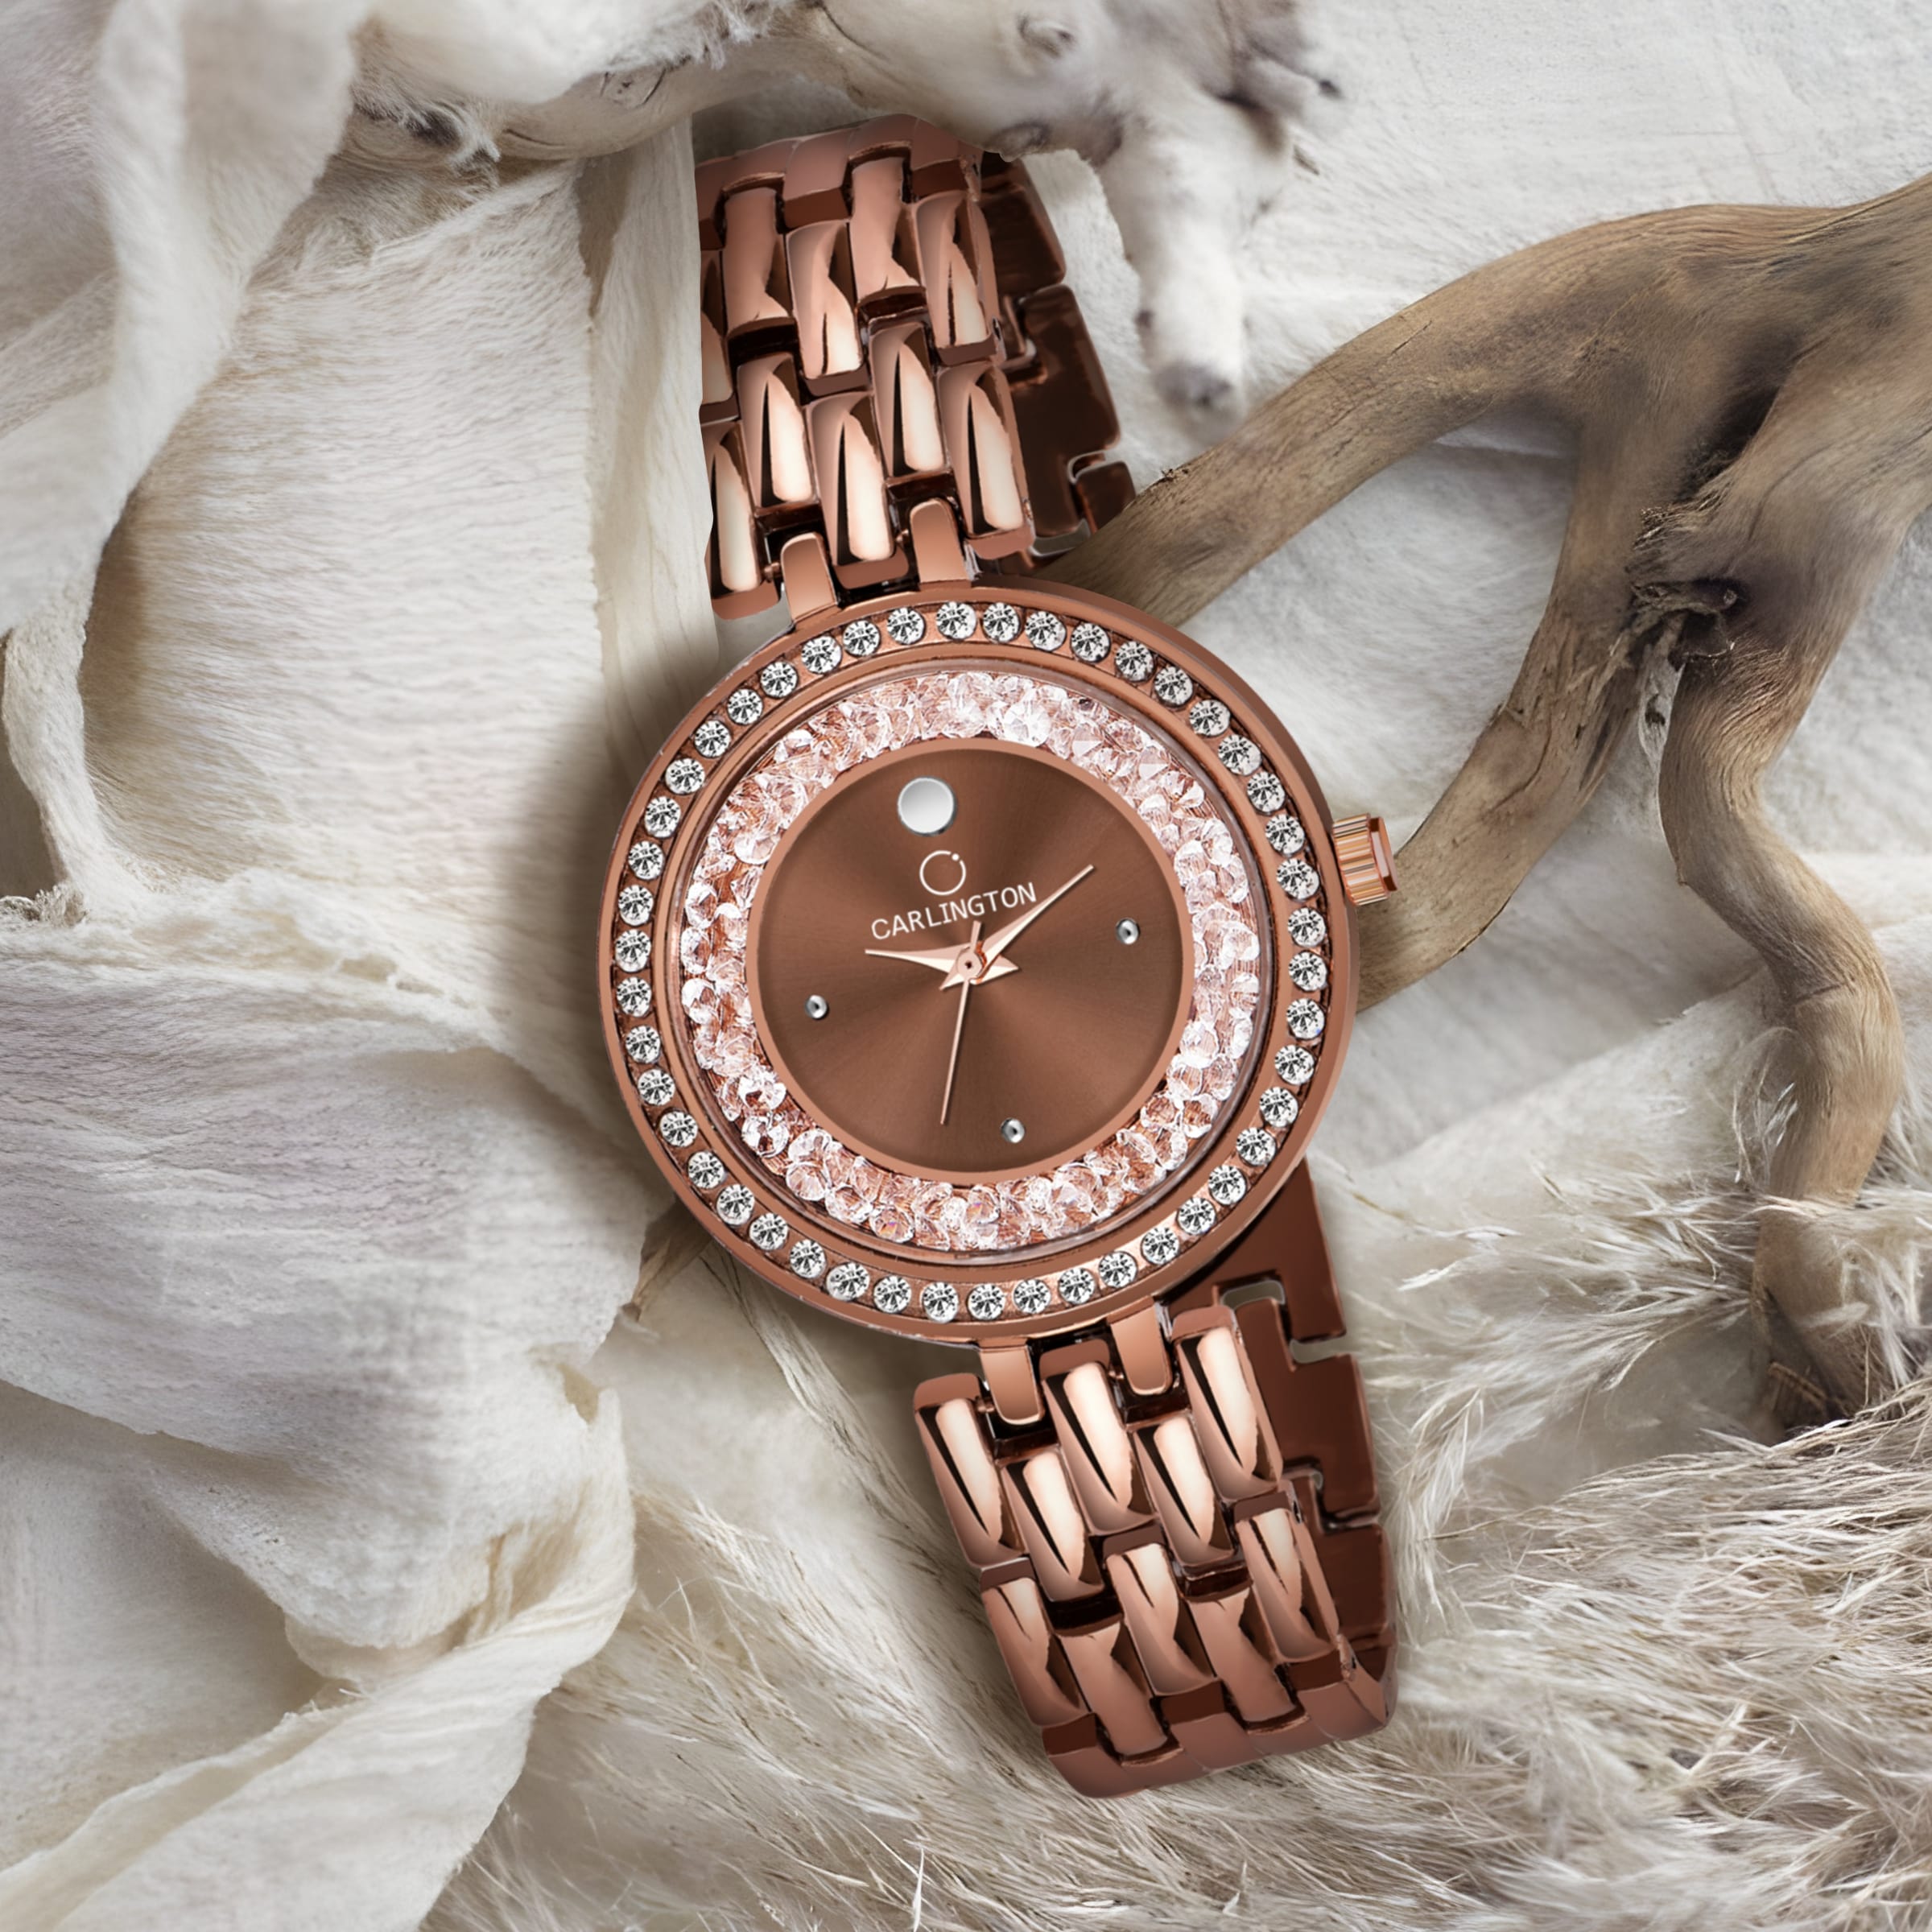 Carlington mova diamond brown women's watch